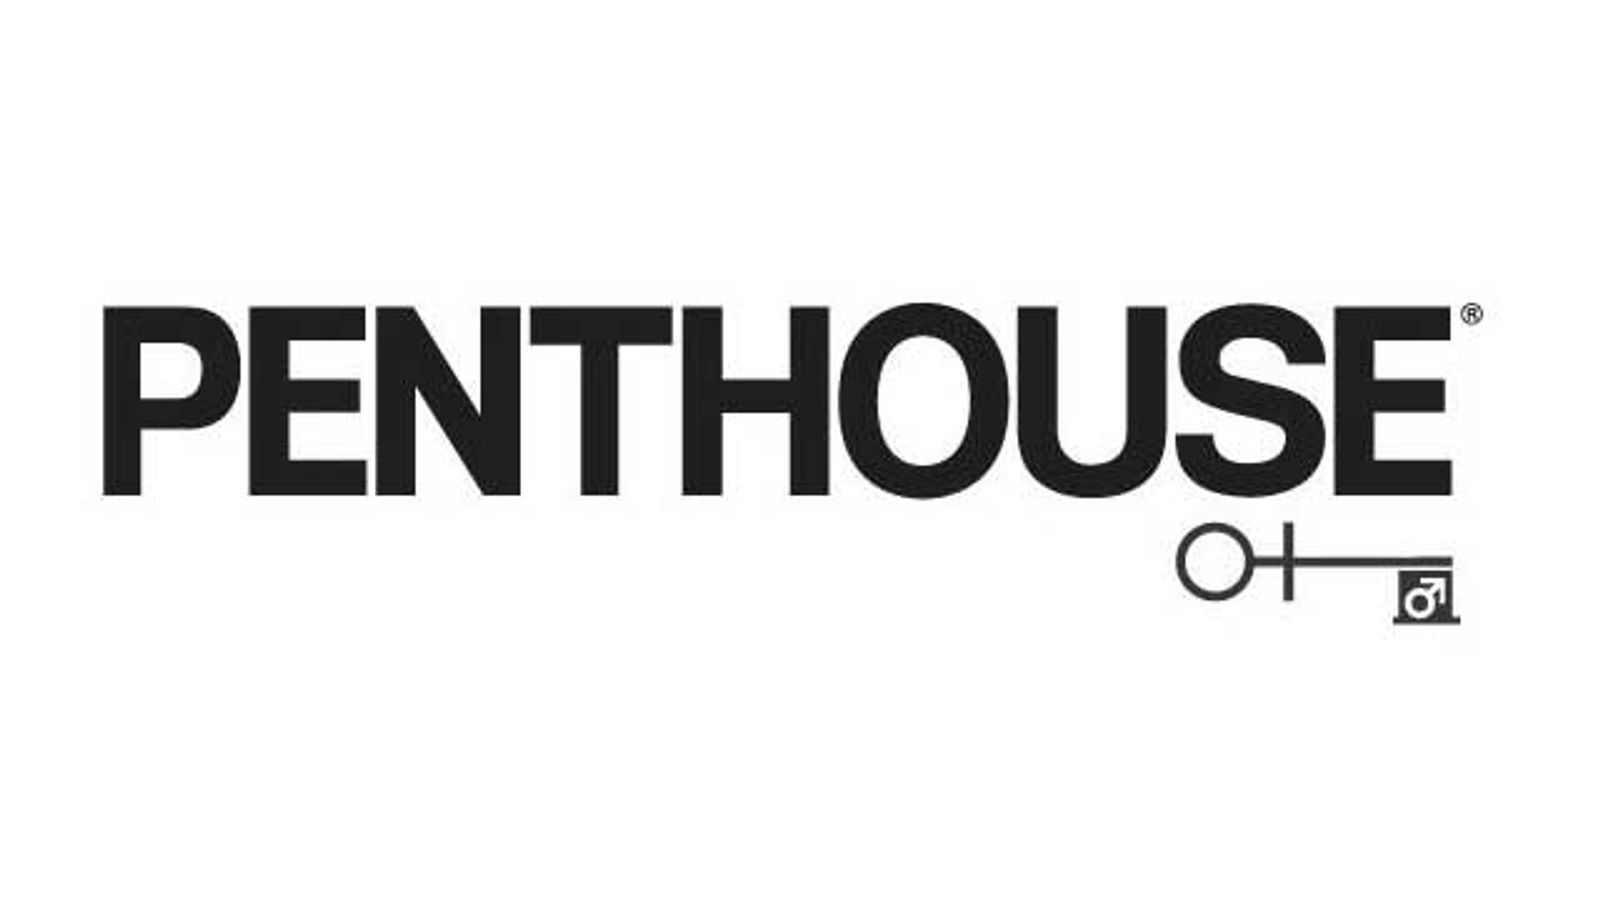 Penthouse to Open Chicago Area ‘Caligula’ Club